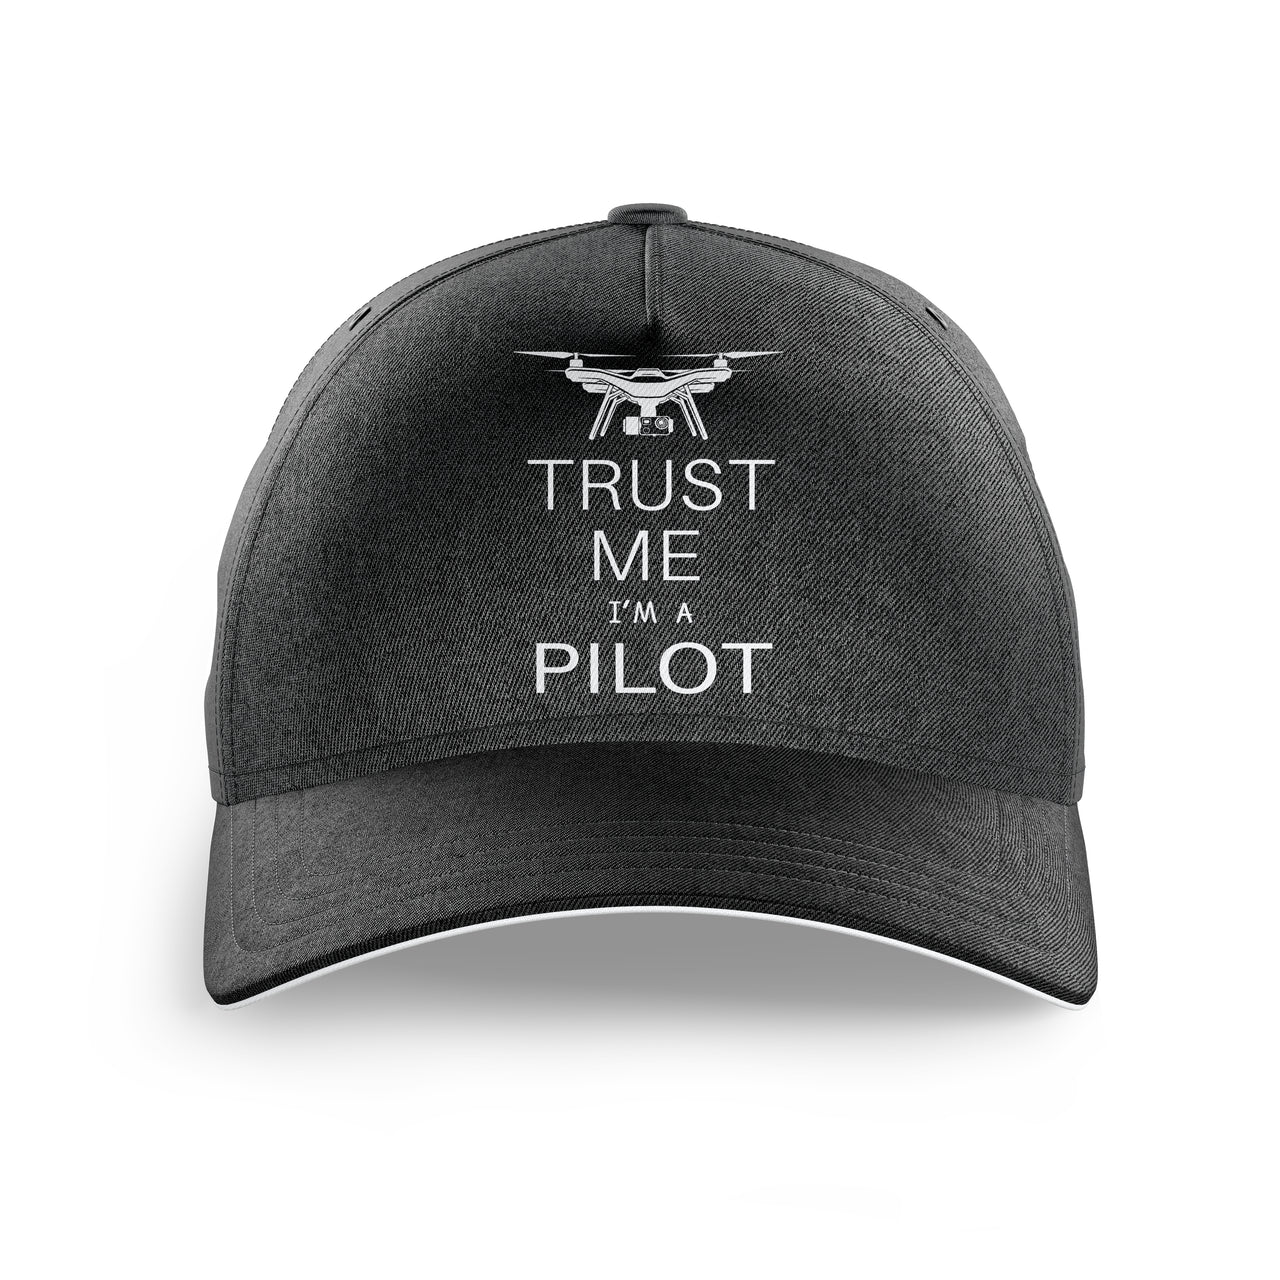 Trust Me I'm a Pilot (Drone) Printed Hats